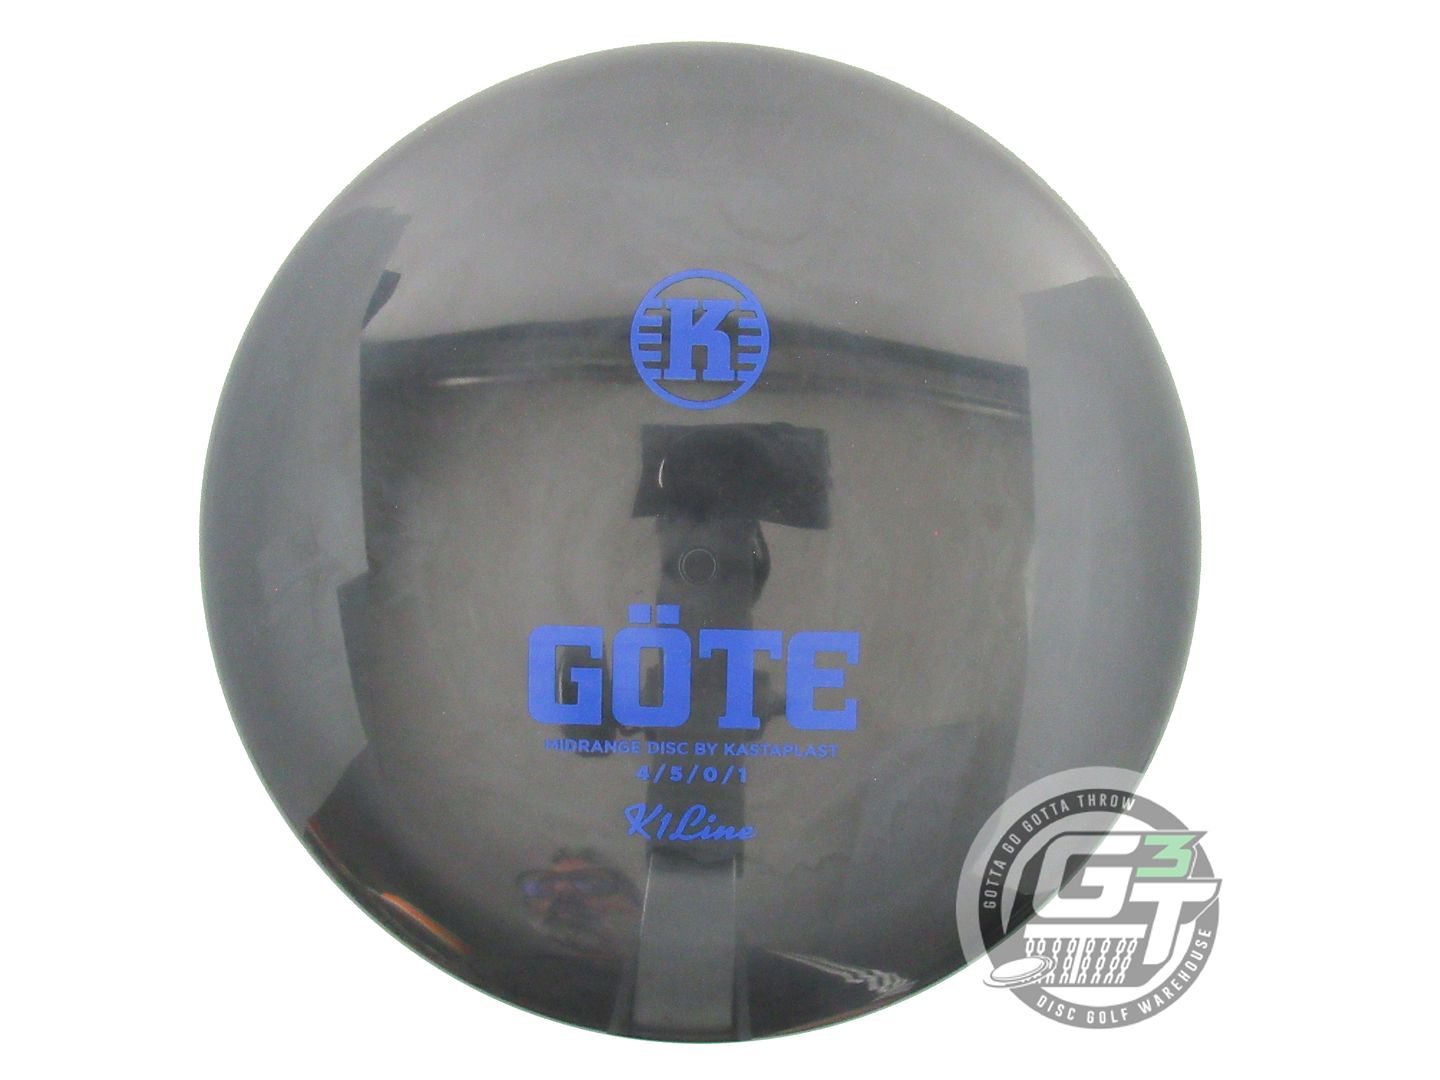 Kastaplast K1 Gote Midrange Golf Disc (Individually Listed)